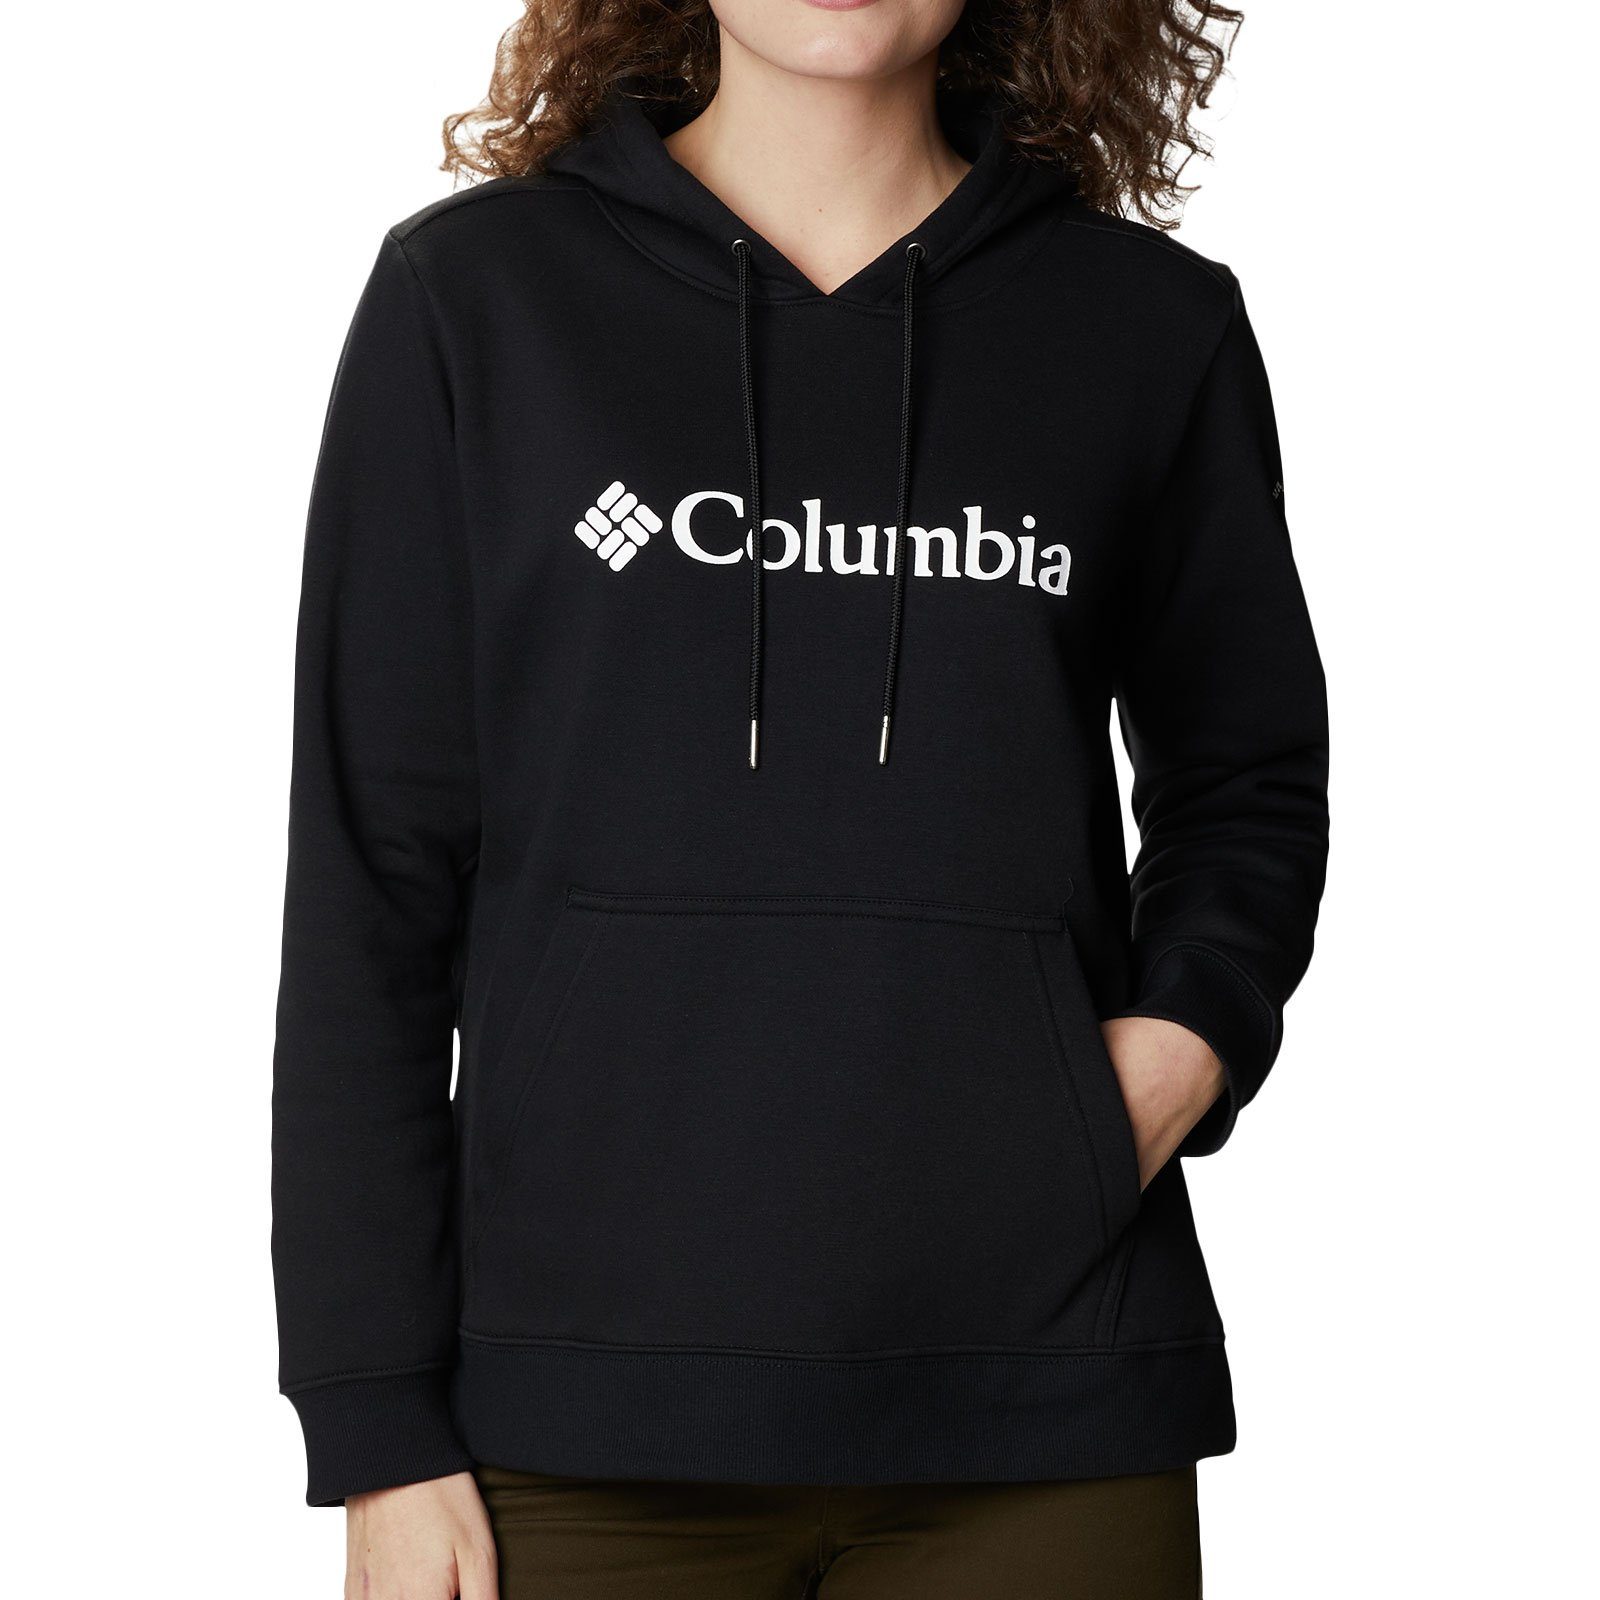 Hoodie Logo Kapuzenpullover Columbia Kängurutasche Columbia™ black 012 mit großer